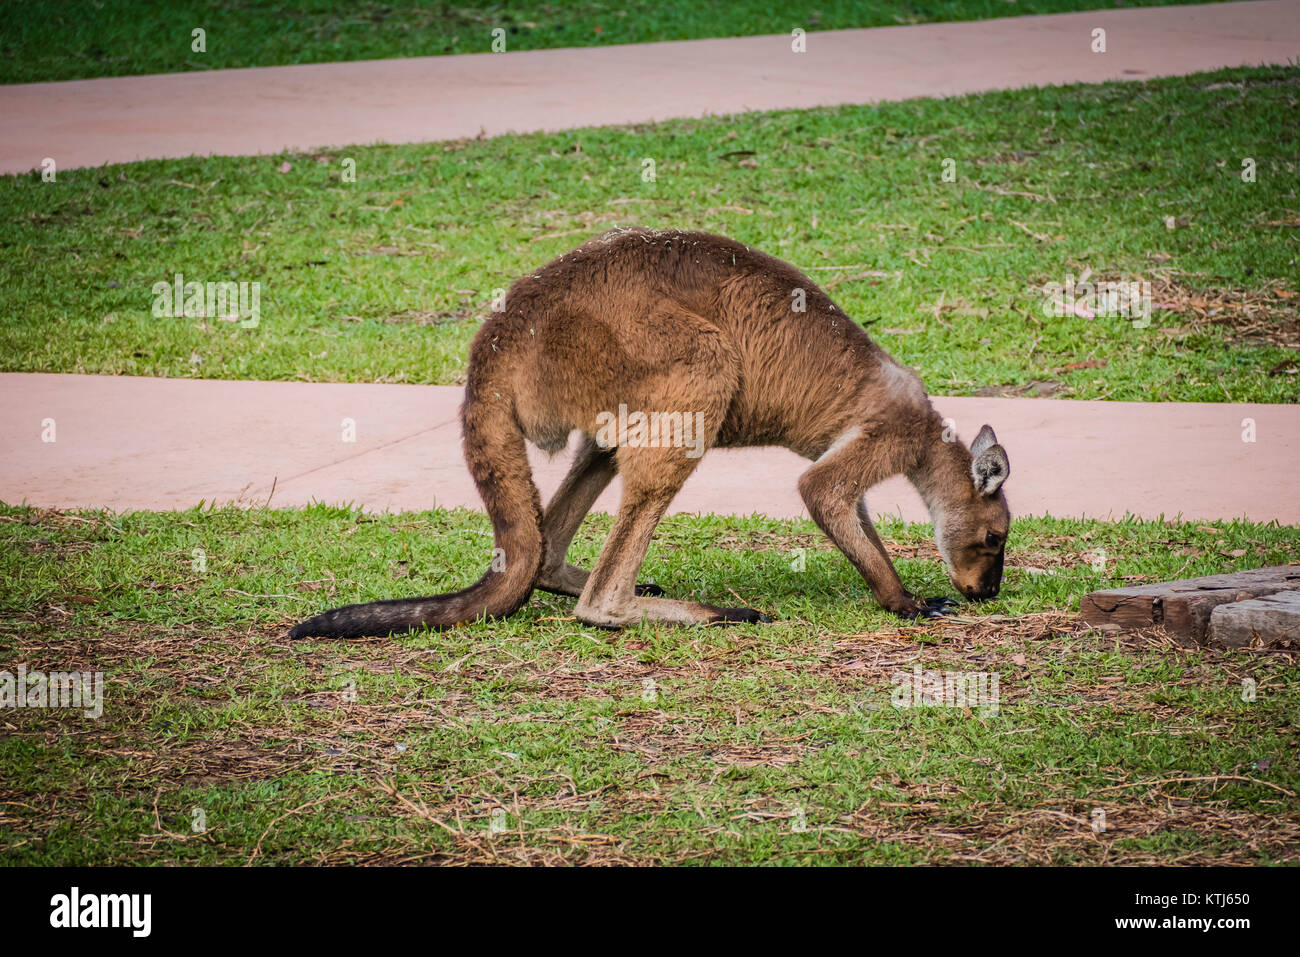 kangaroo eating grass Stock Photo